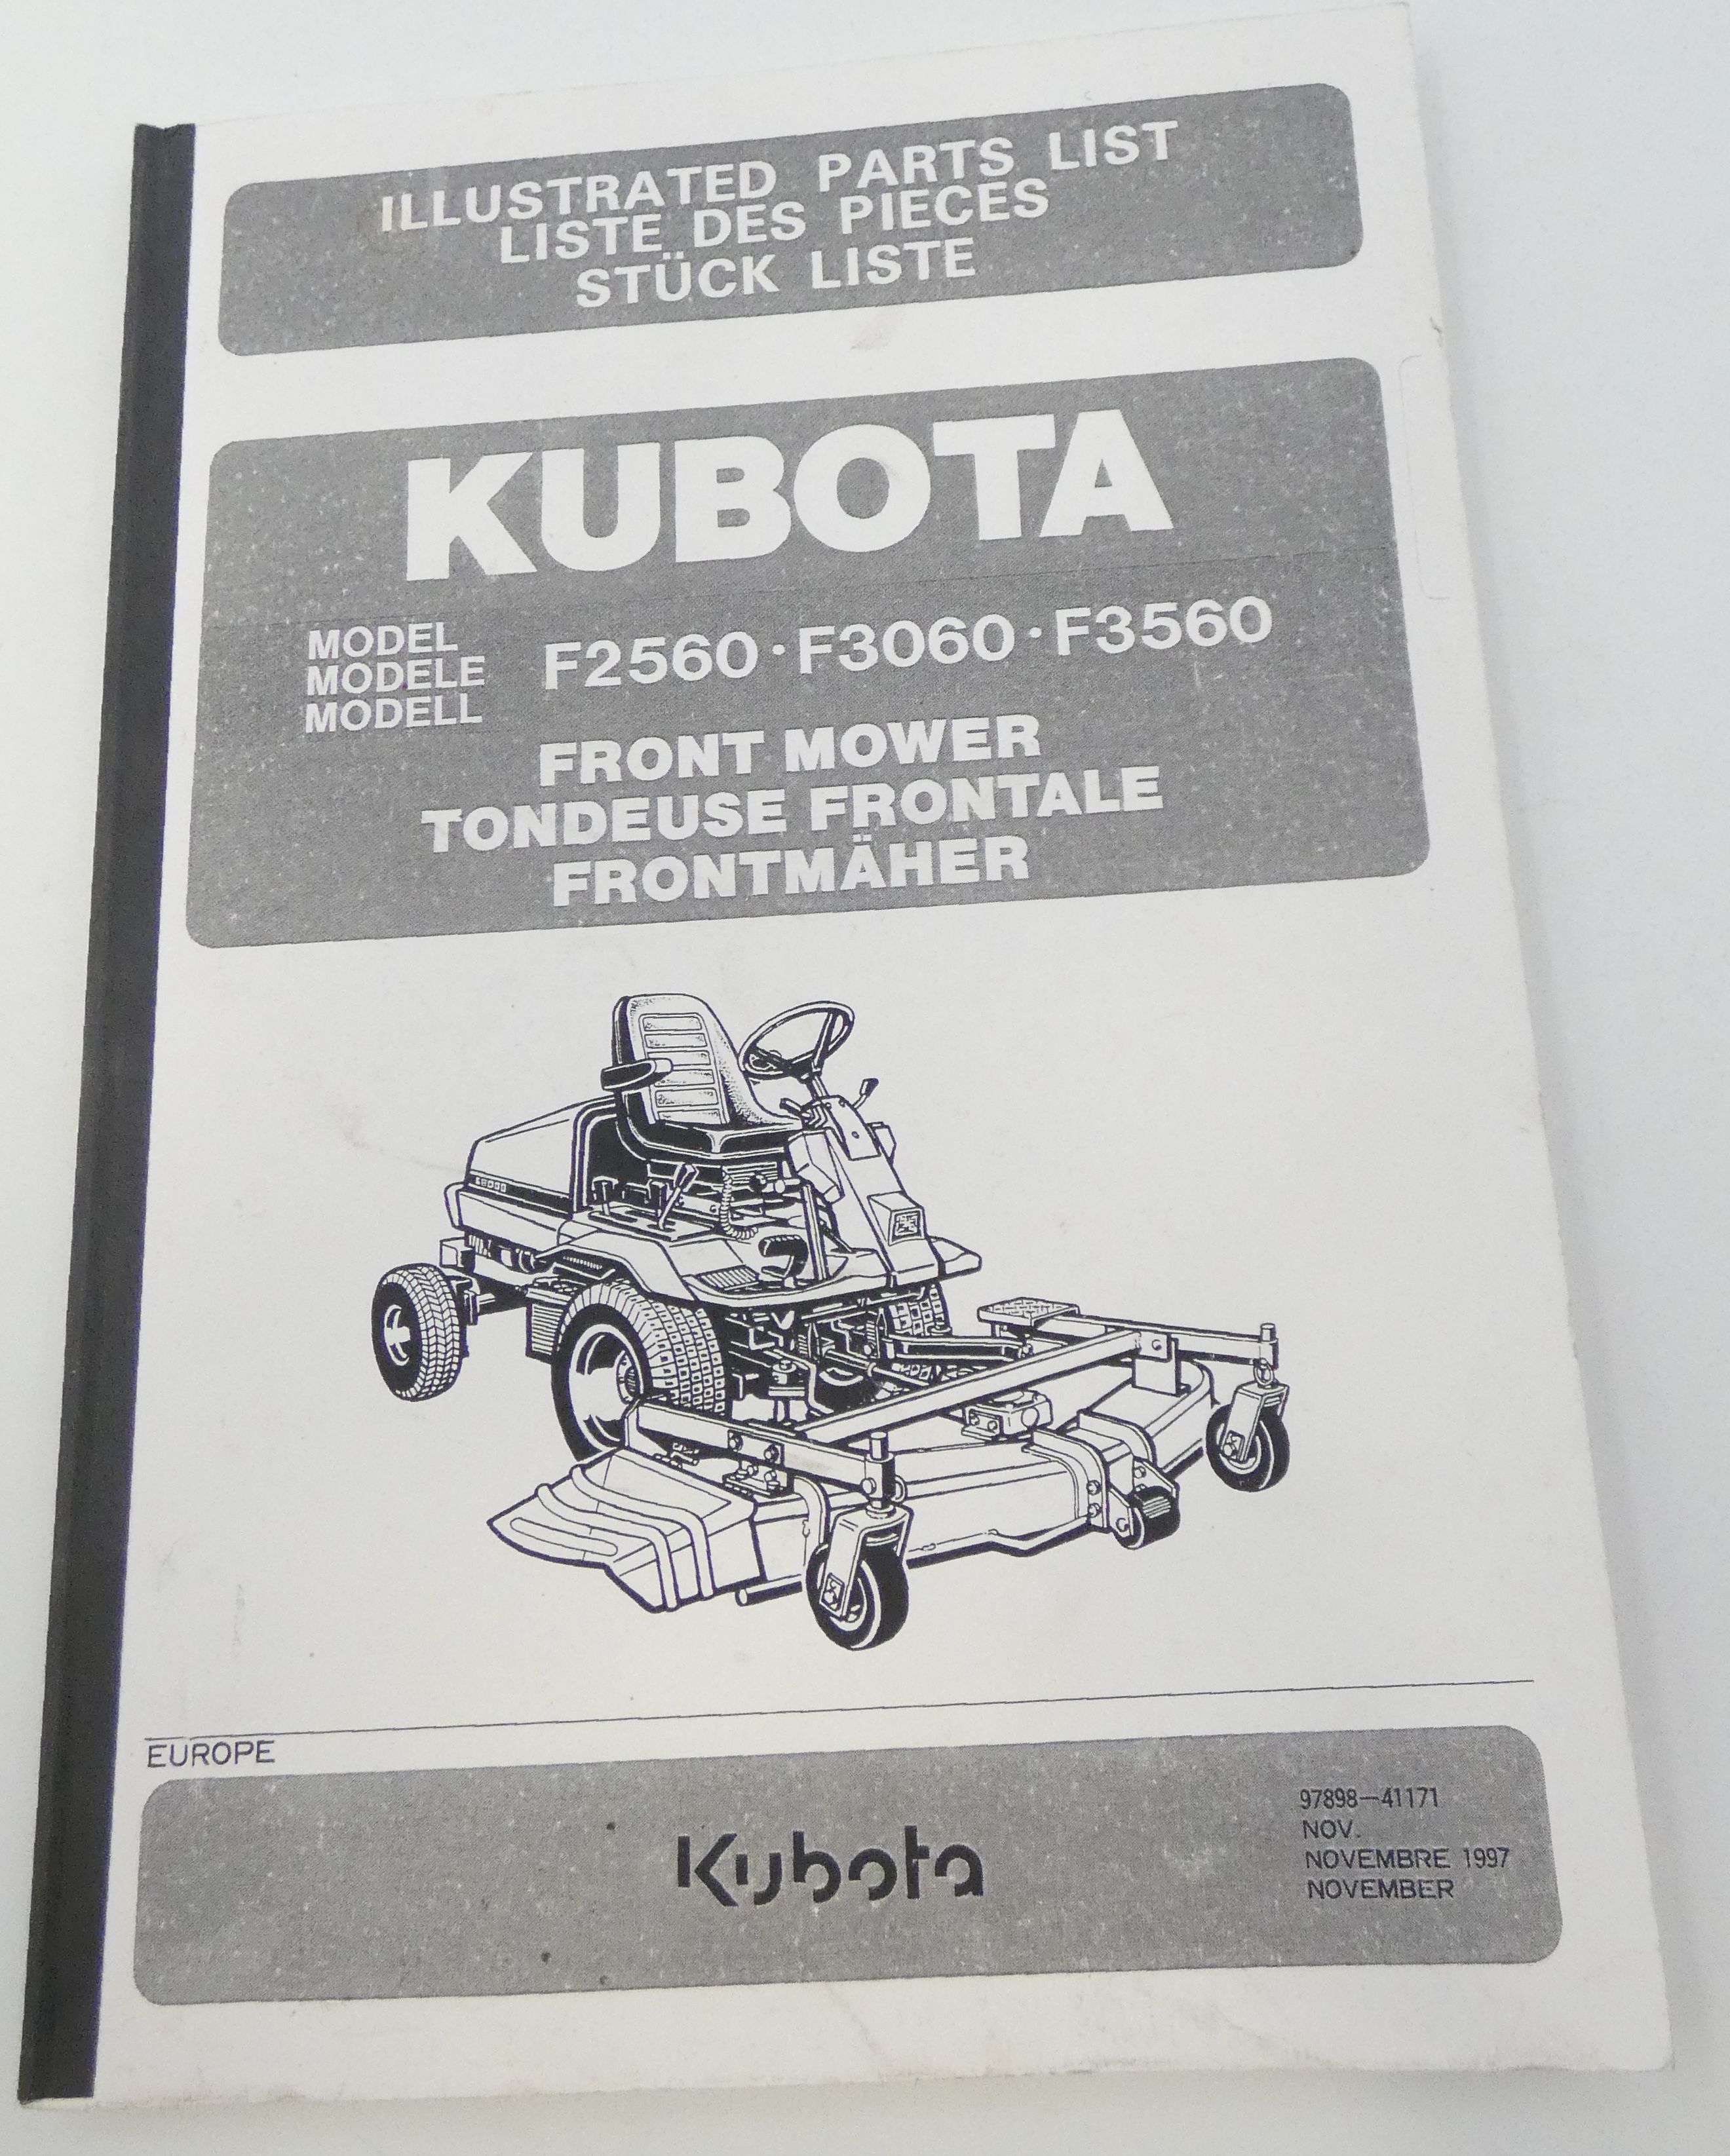 Kubota model F2560, F3060, F3560 front model illustrated parts list